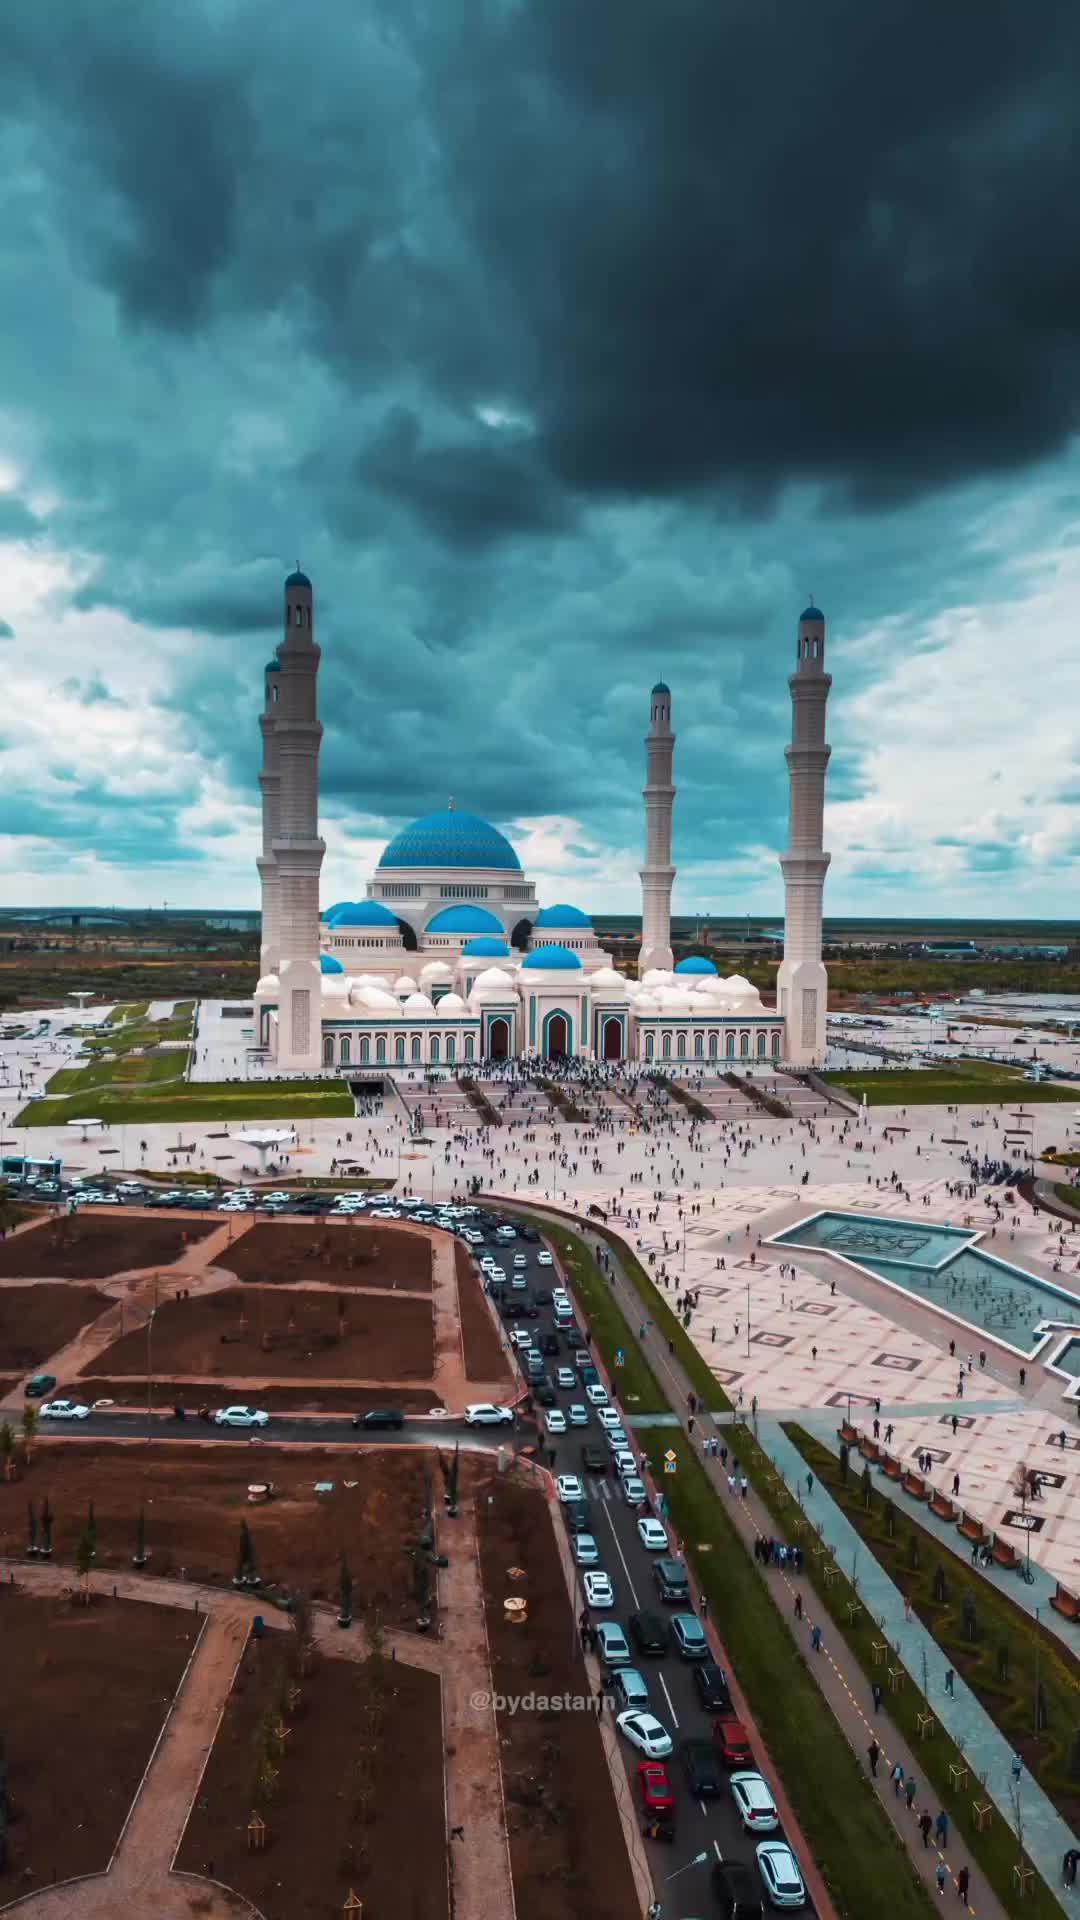 Astana Grand Mosque: Iconic Landmark in Kazakhstan